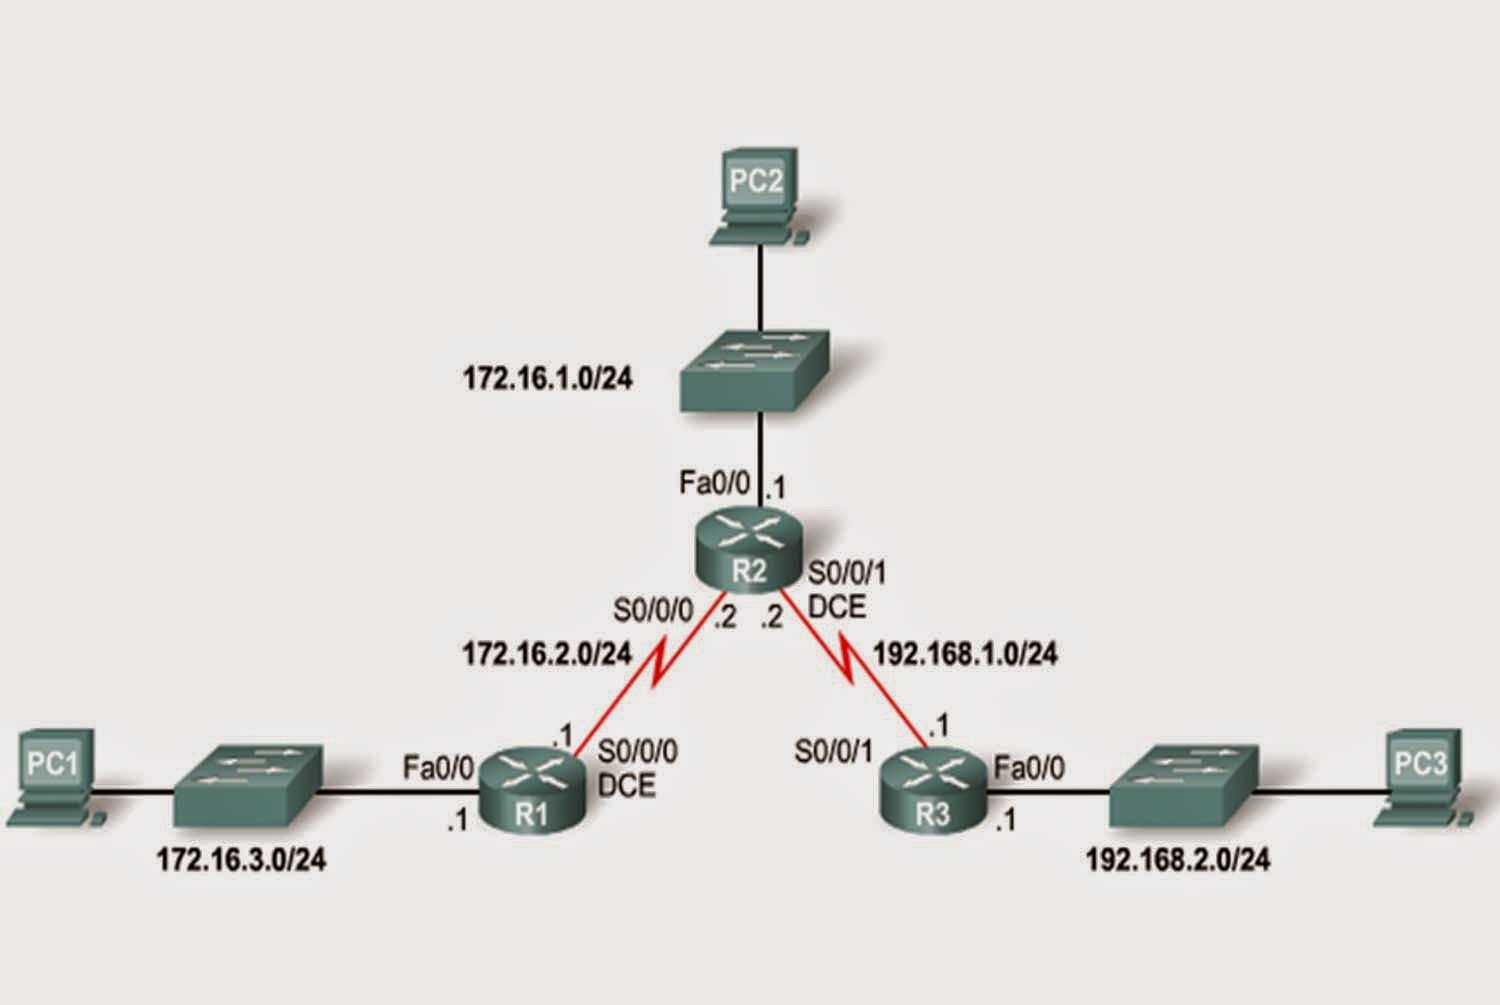 Маршрутизация в интернете. Таблица маршрутизации Router. Статическая маршрутизация Cisco. Динамическая маршрутизация схема Циско. Таблица маршрутизации Cisco.